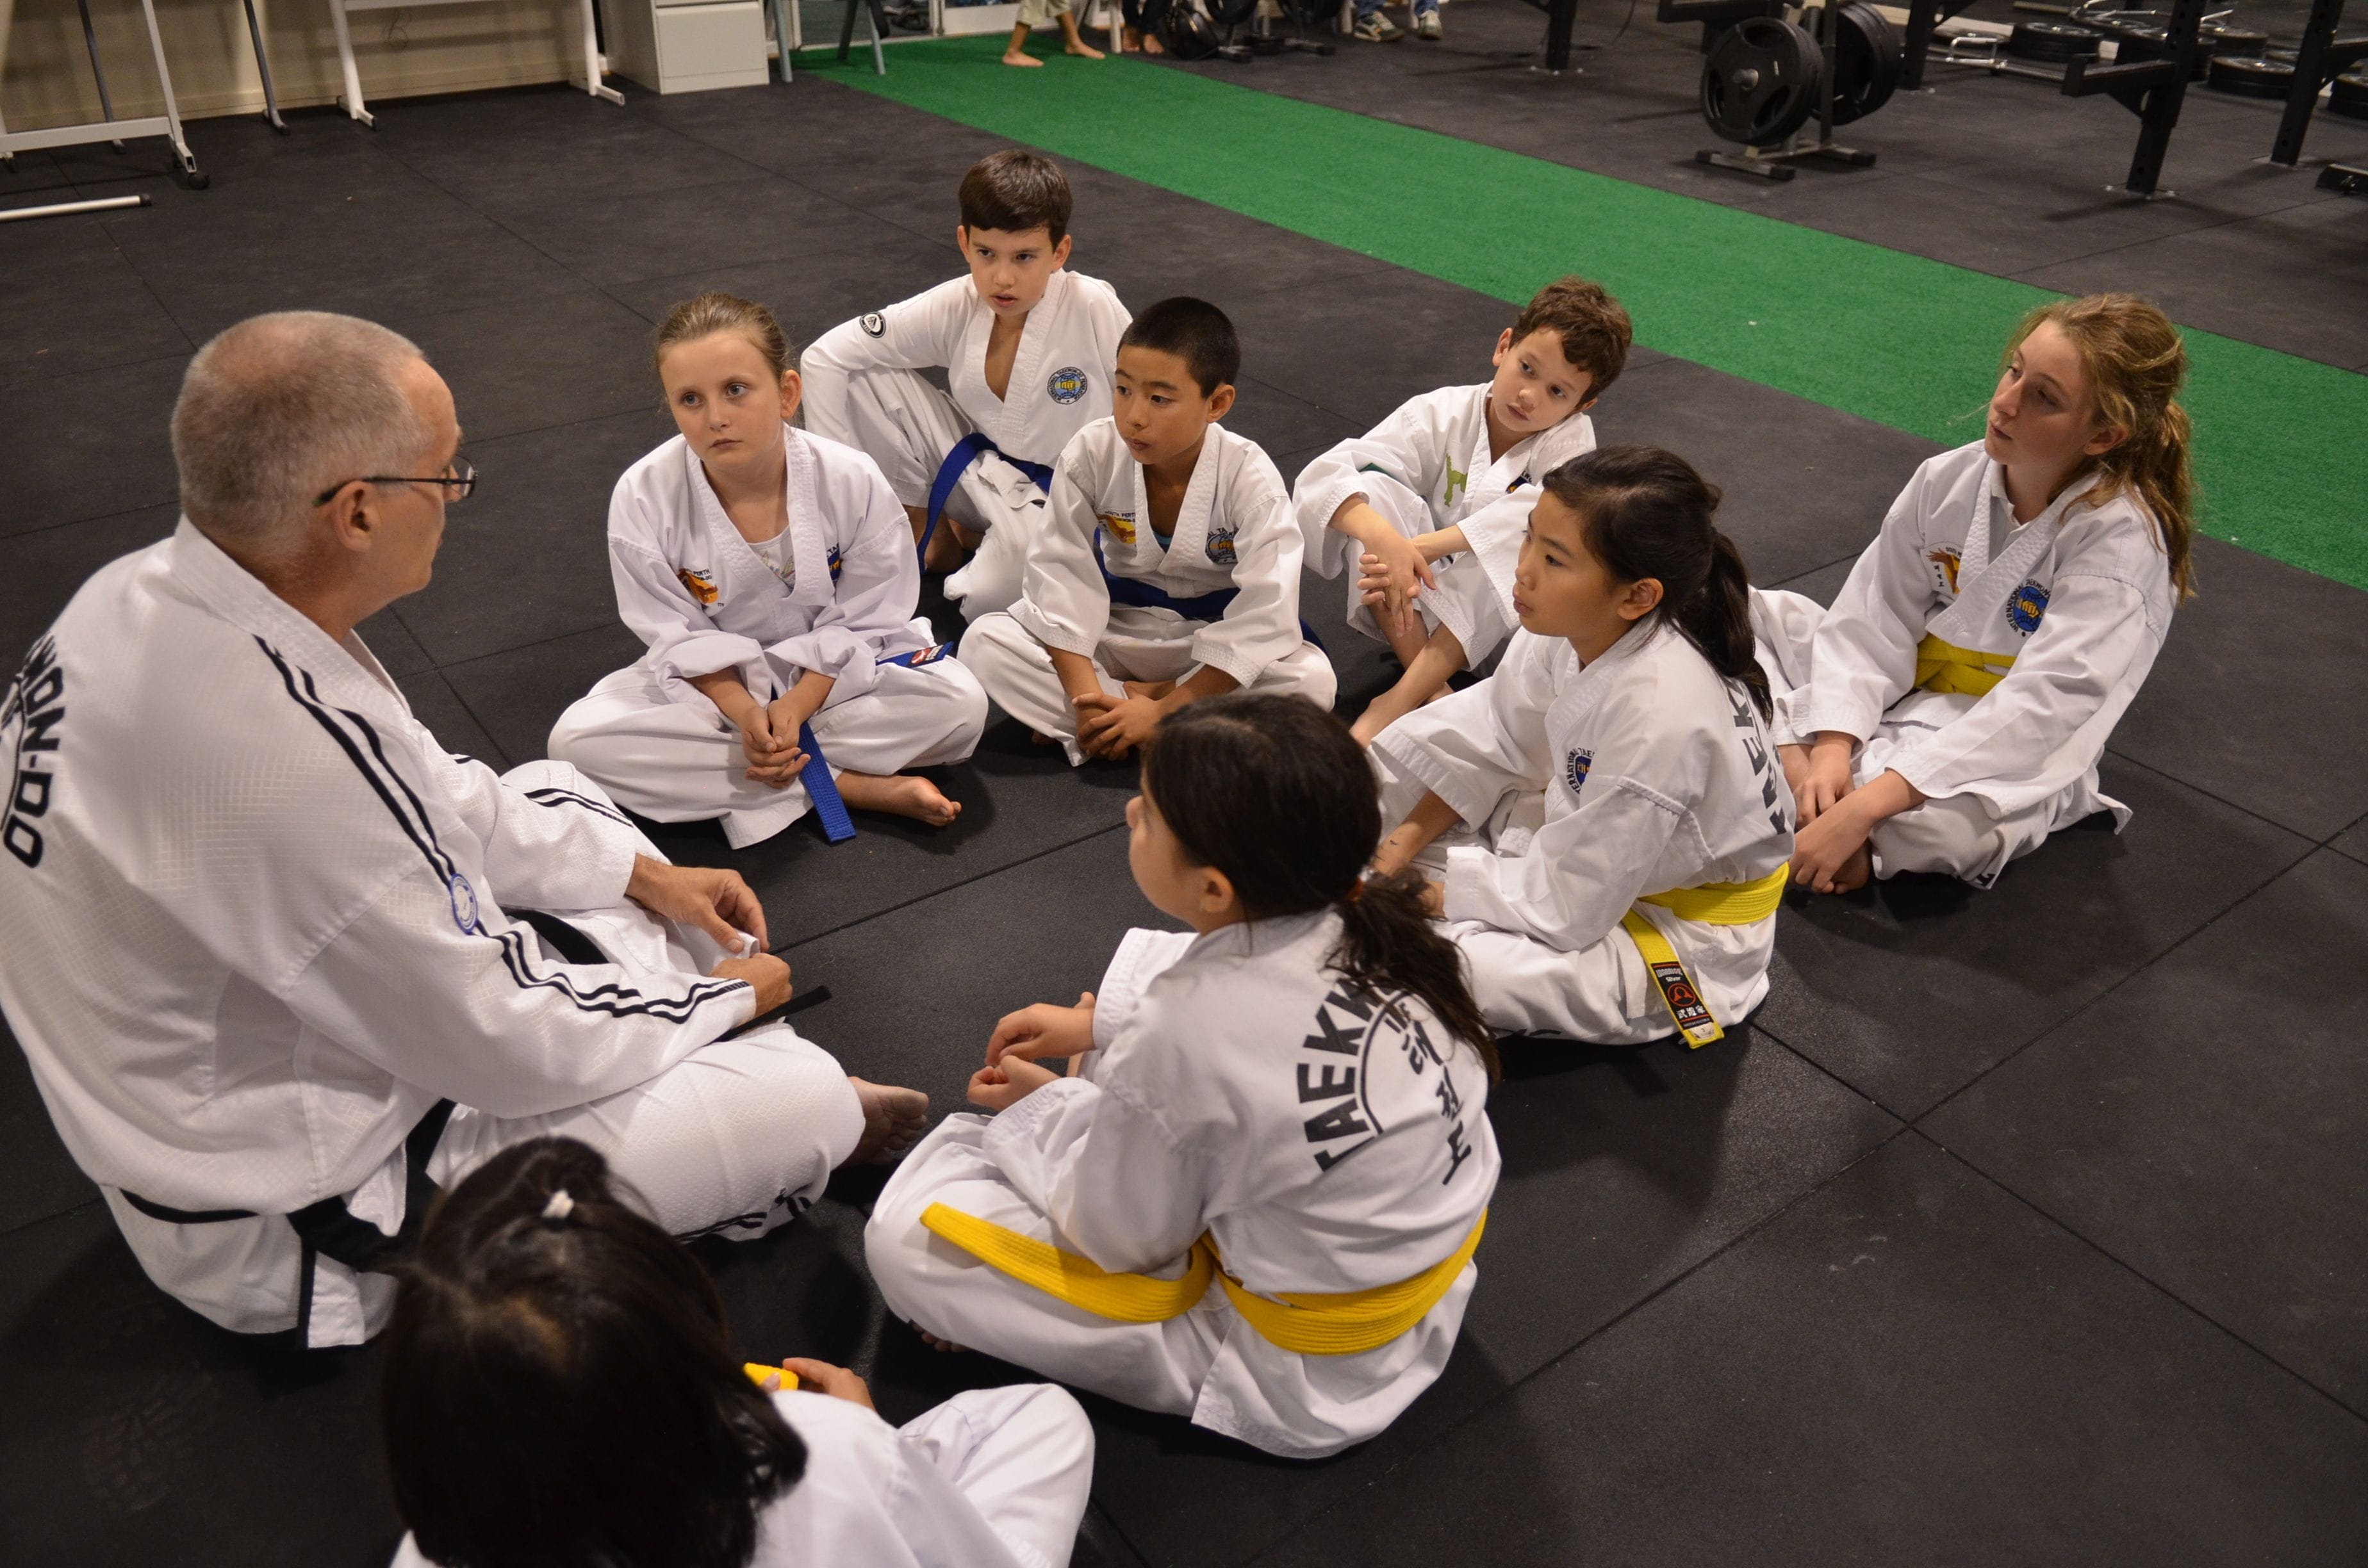 Martial Arts and Self Defense Classes through Taekwon-Do